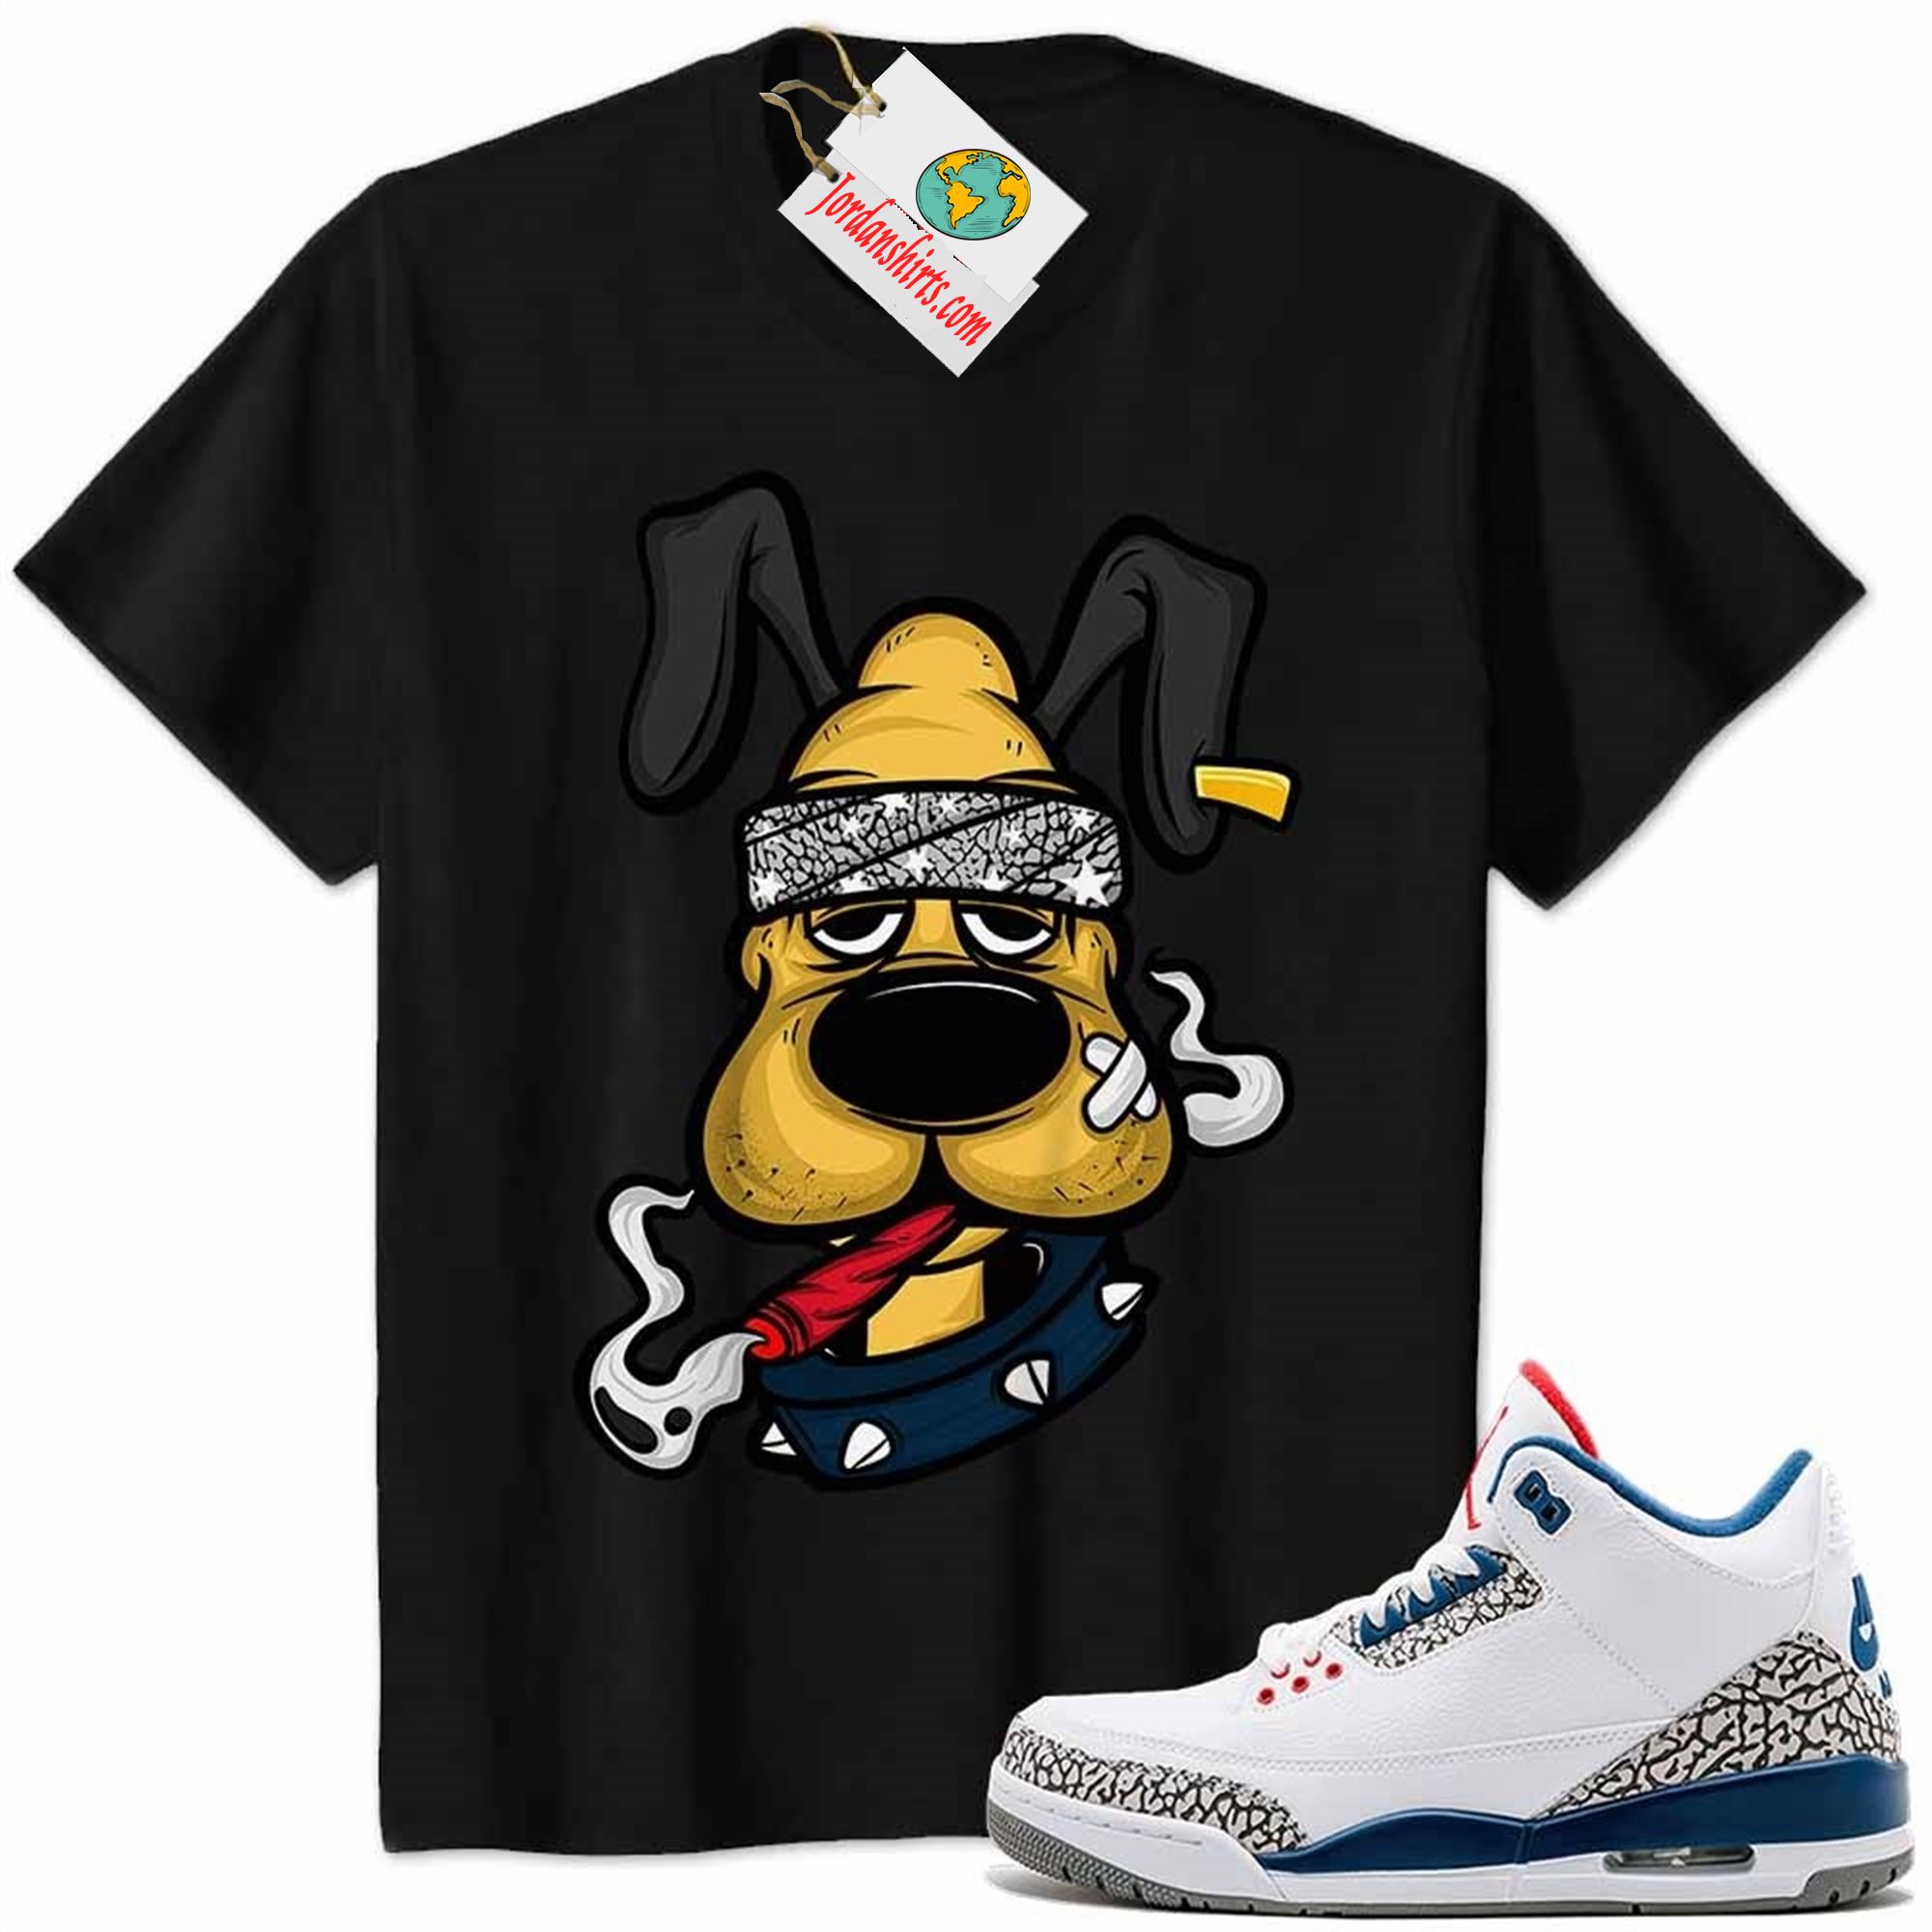 Jordan 3 Shirt, Gangster Pluto Smoke Weed Black Air Jordan 3 True Blue 3s Plus Size Up To 5xl